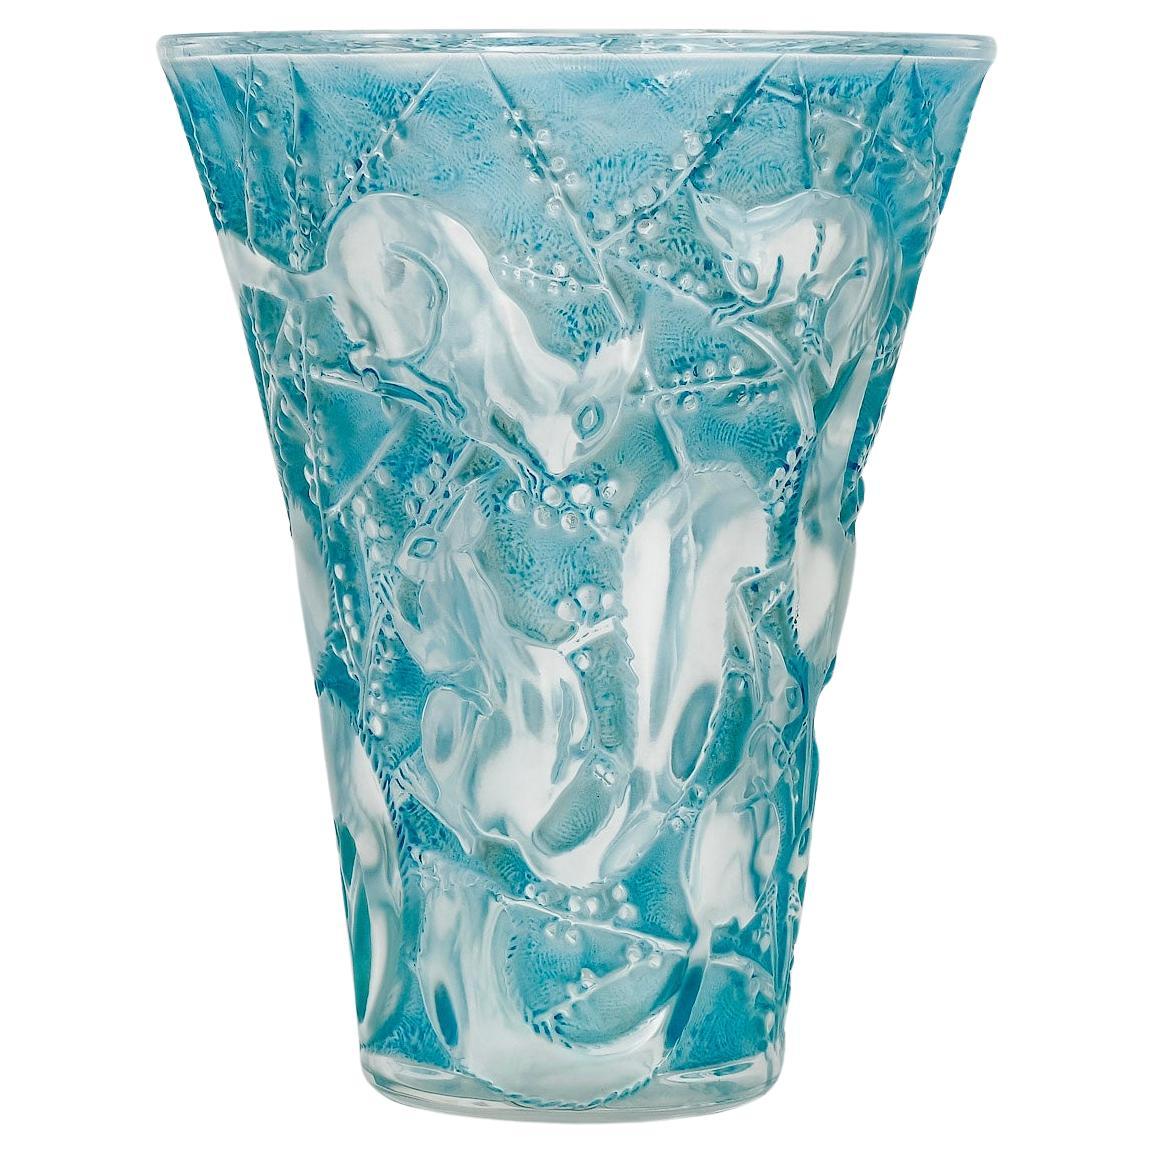 1934 Rene Lalique Vase Senart Verre avec Patina Bleu Ecureuil